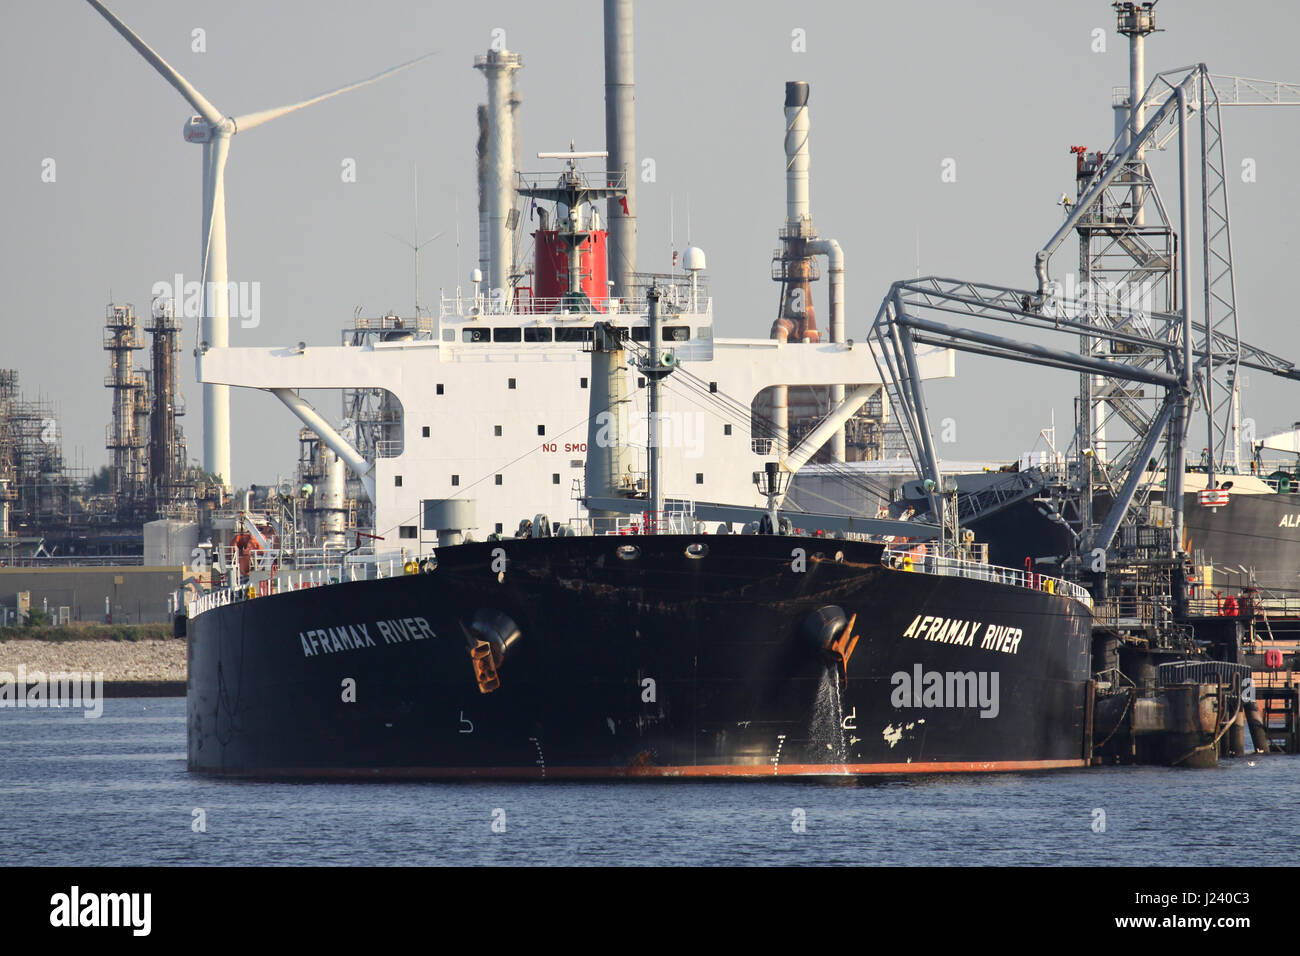 oil tanker AFRAMAX RIVER at Europoort Rotterdam Stock Photo